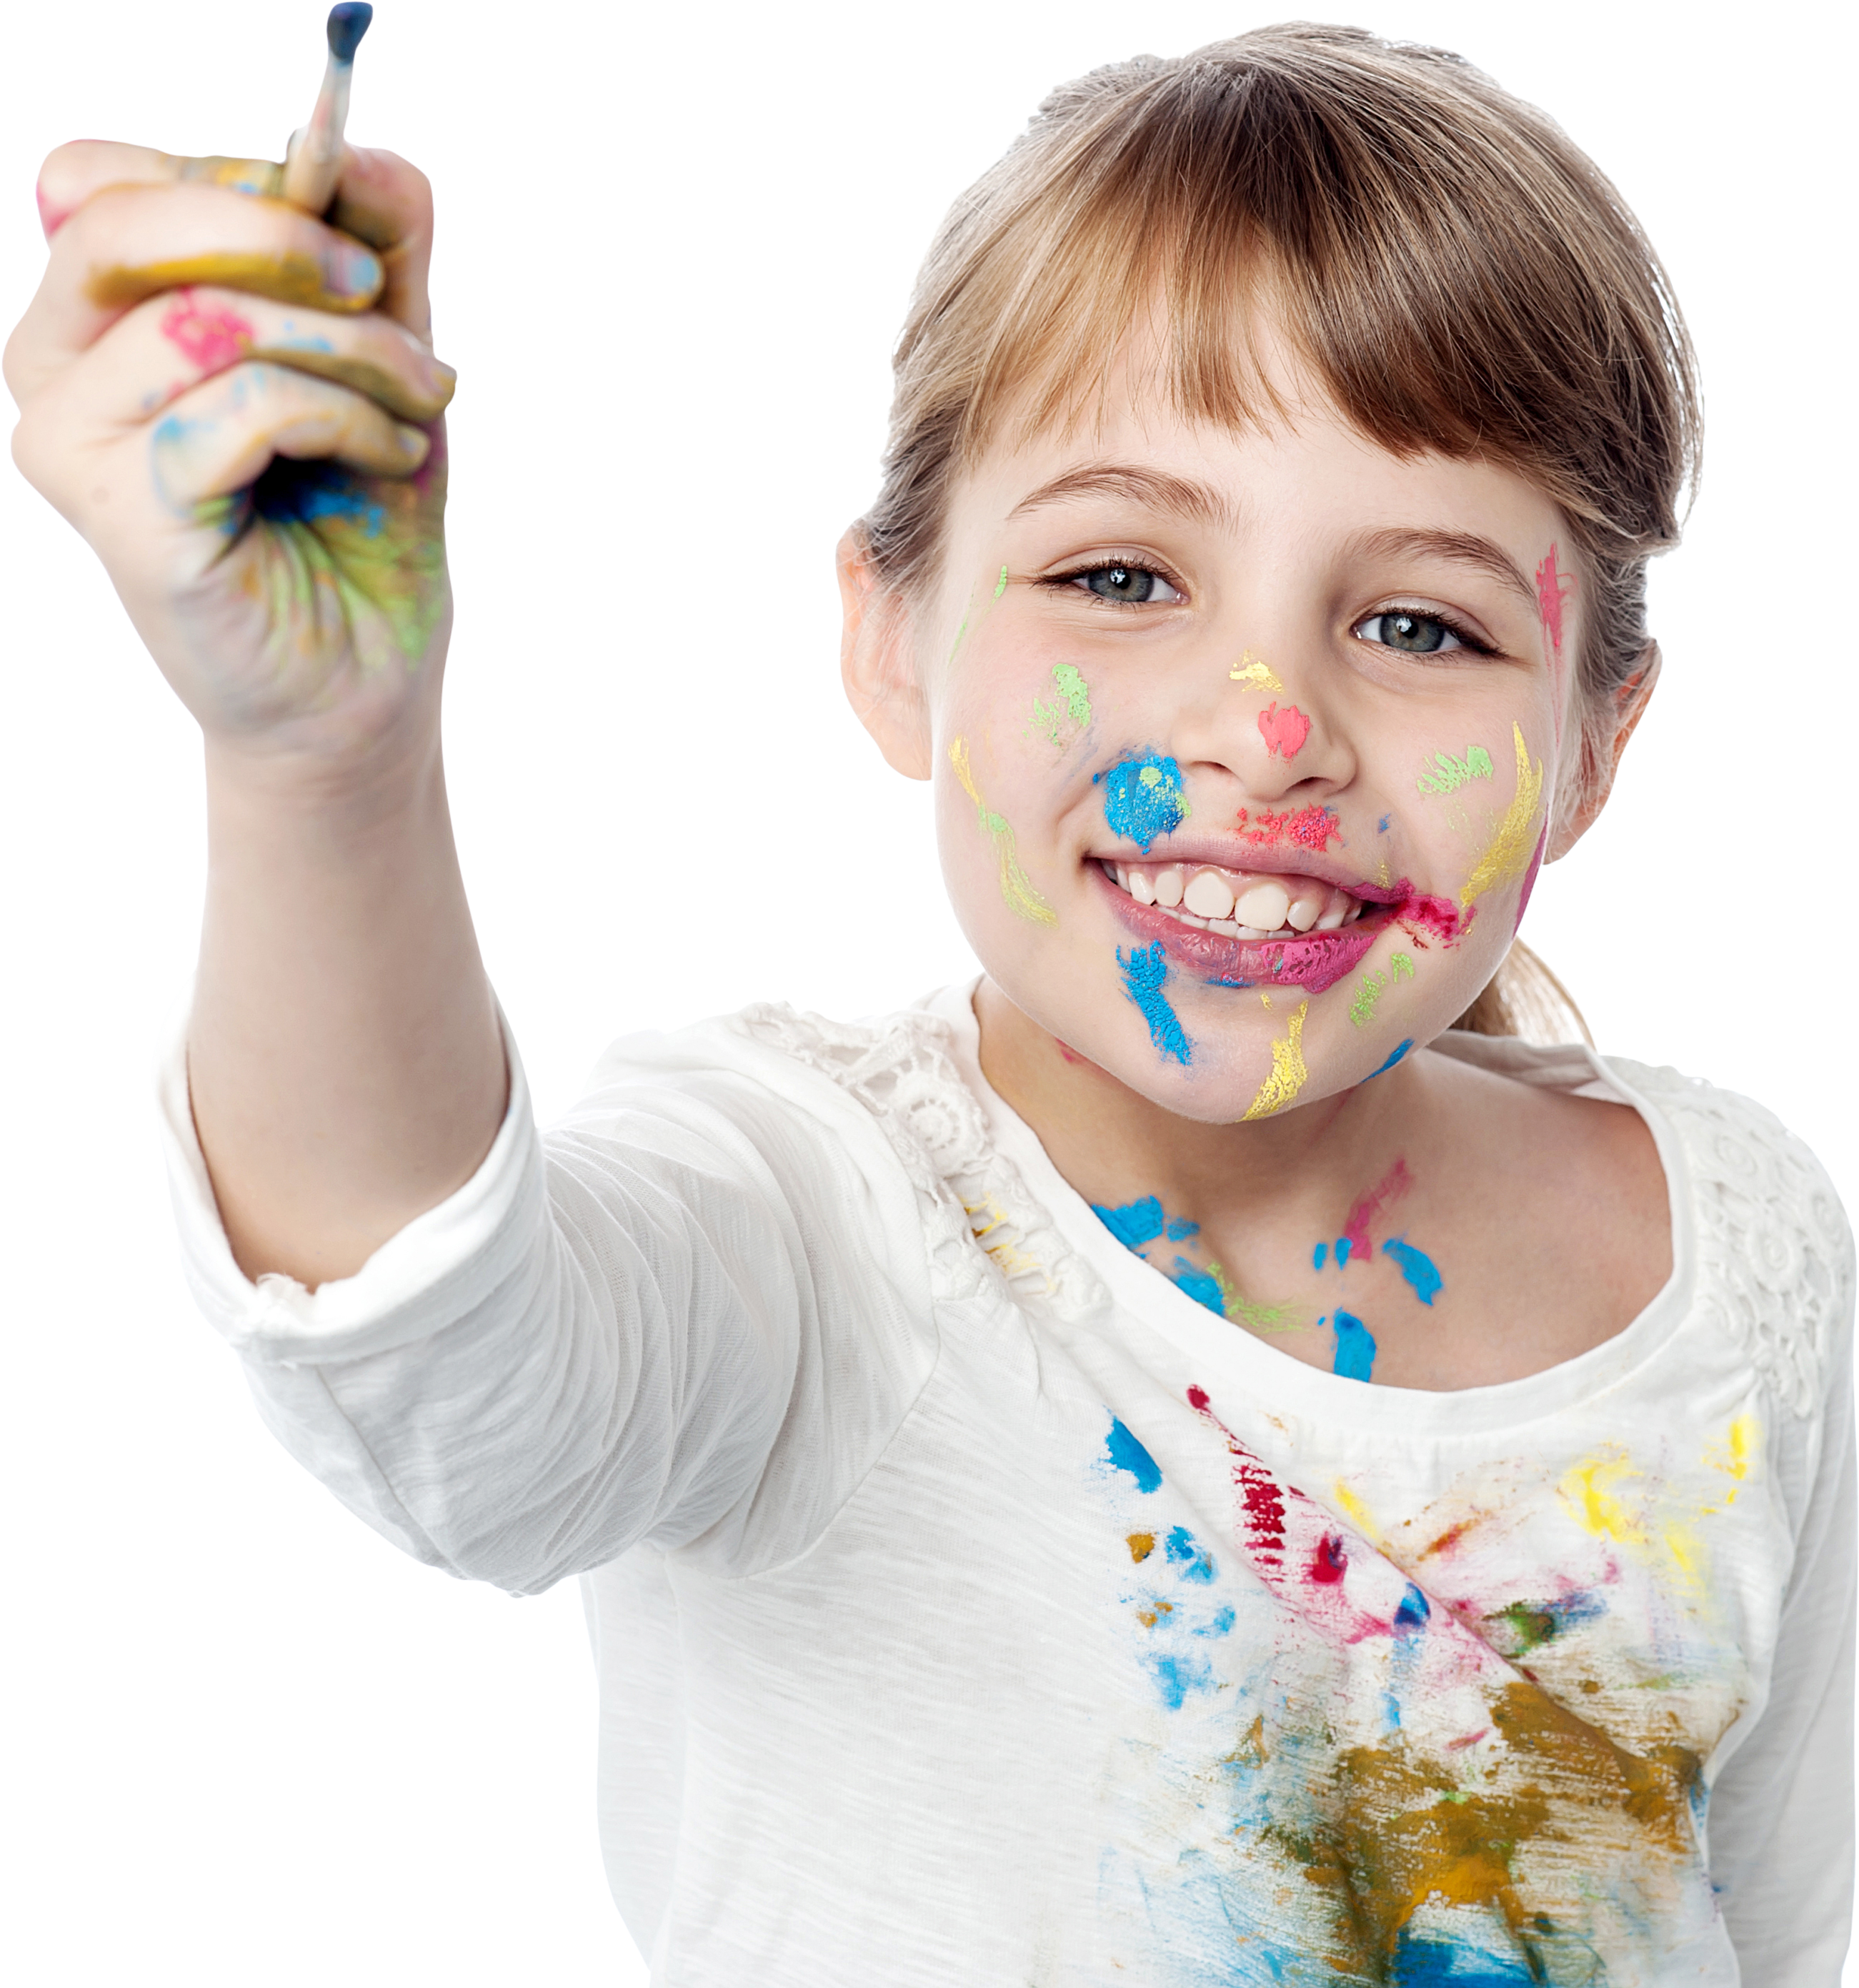 Kid paint. Краски для детей. Краски для девочек. Ребенок с кисточкой и красками. Фотосессия с красками дети.